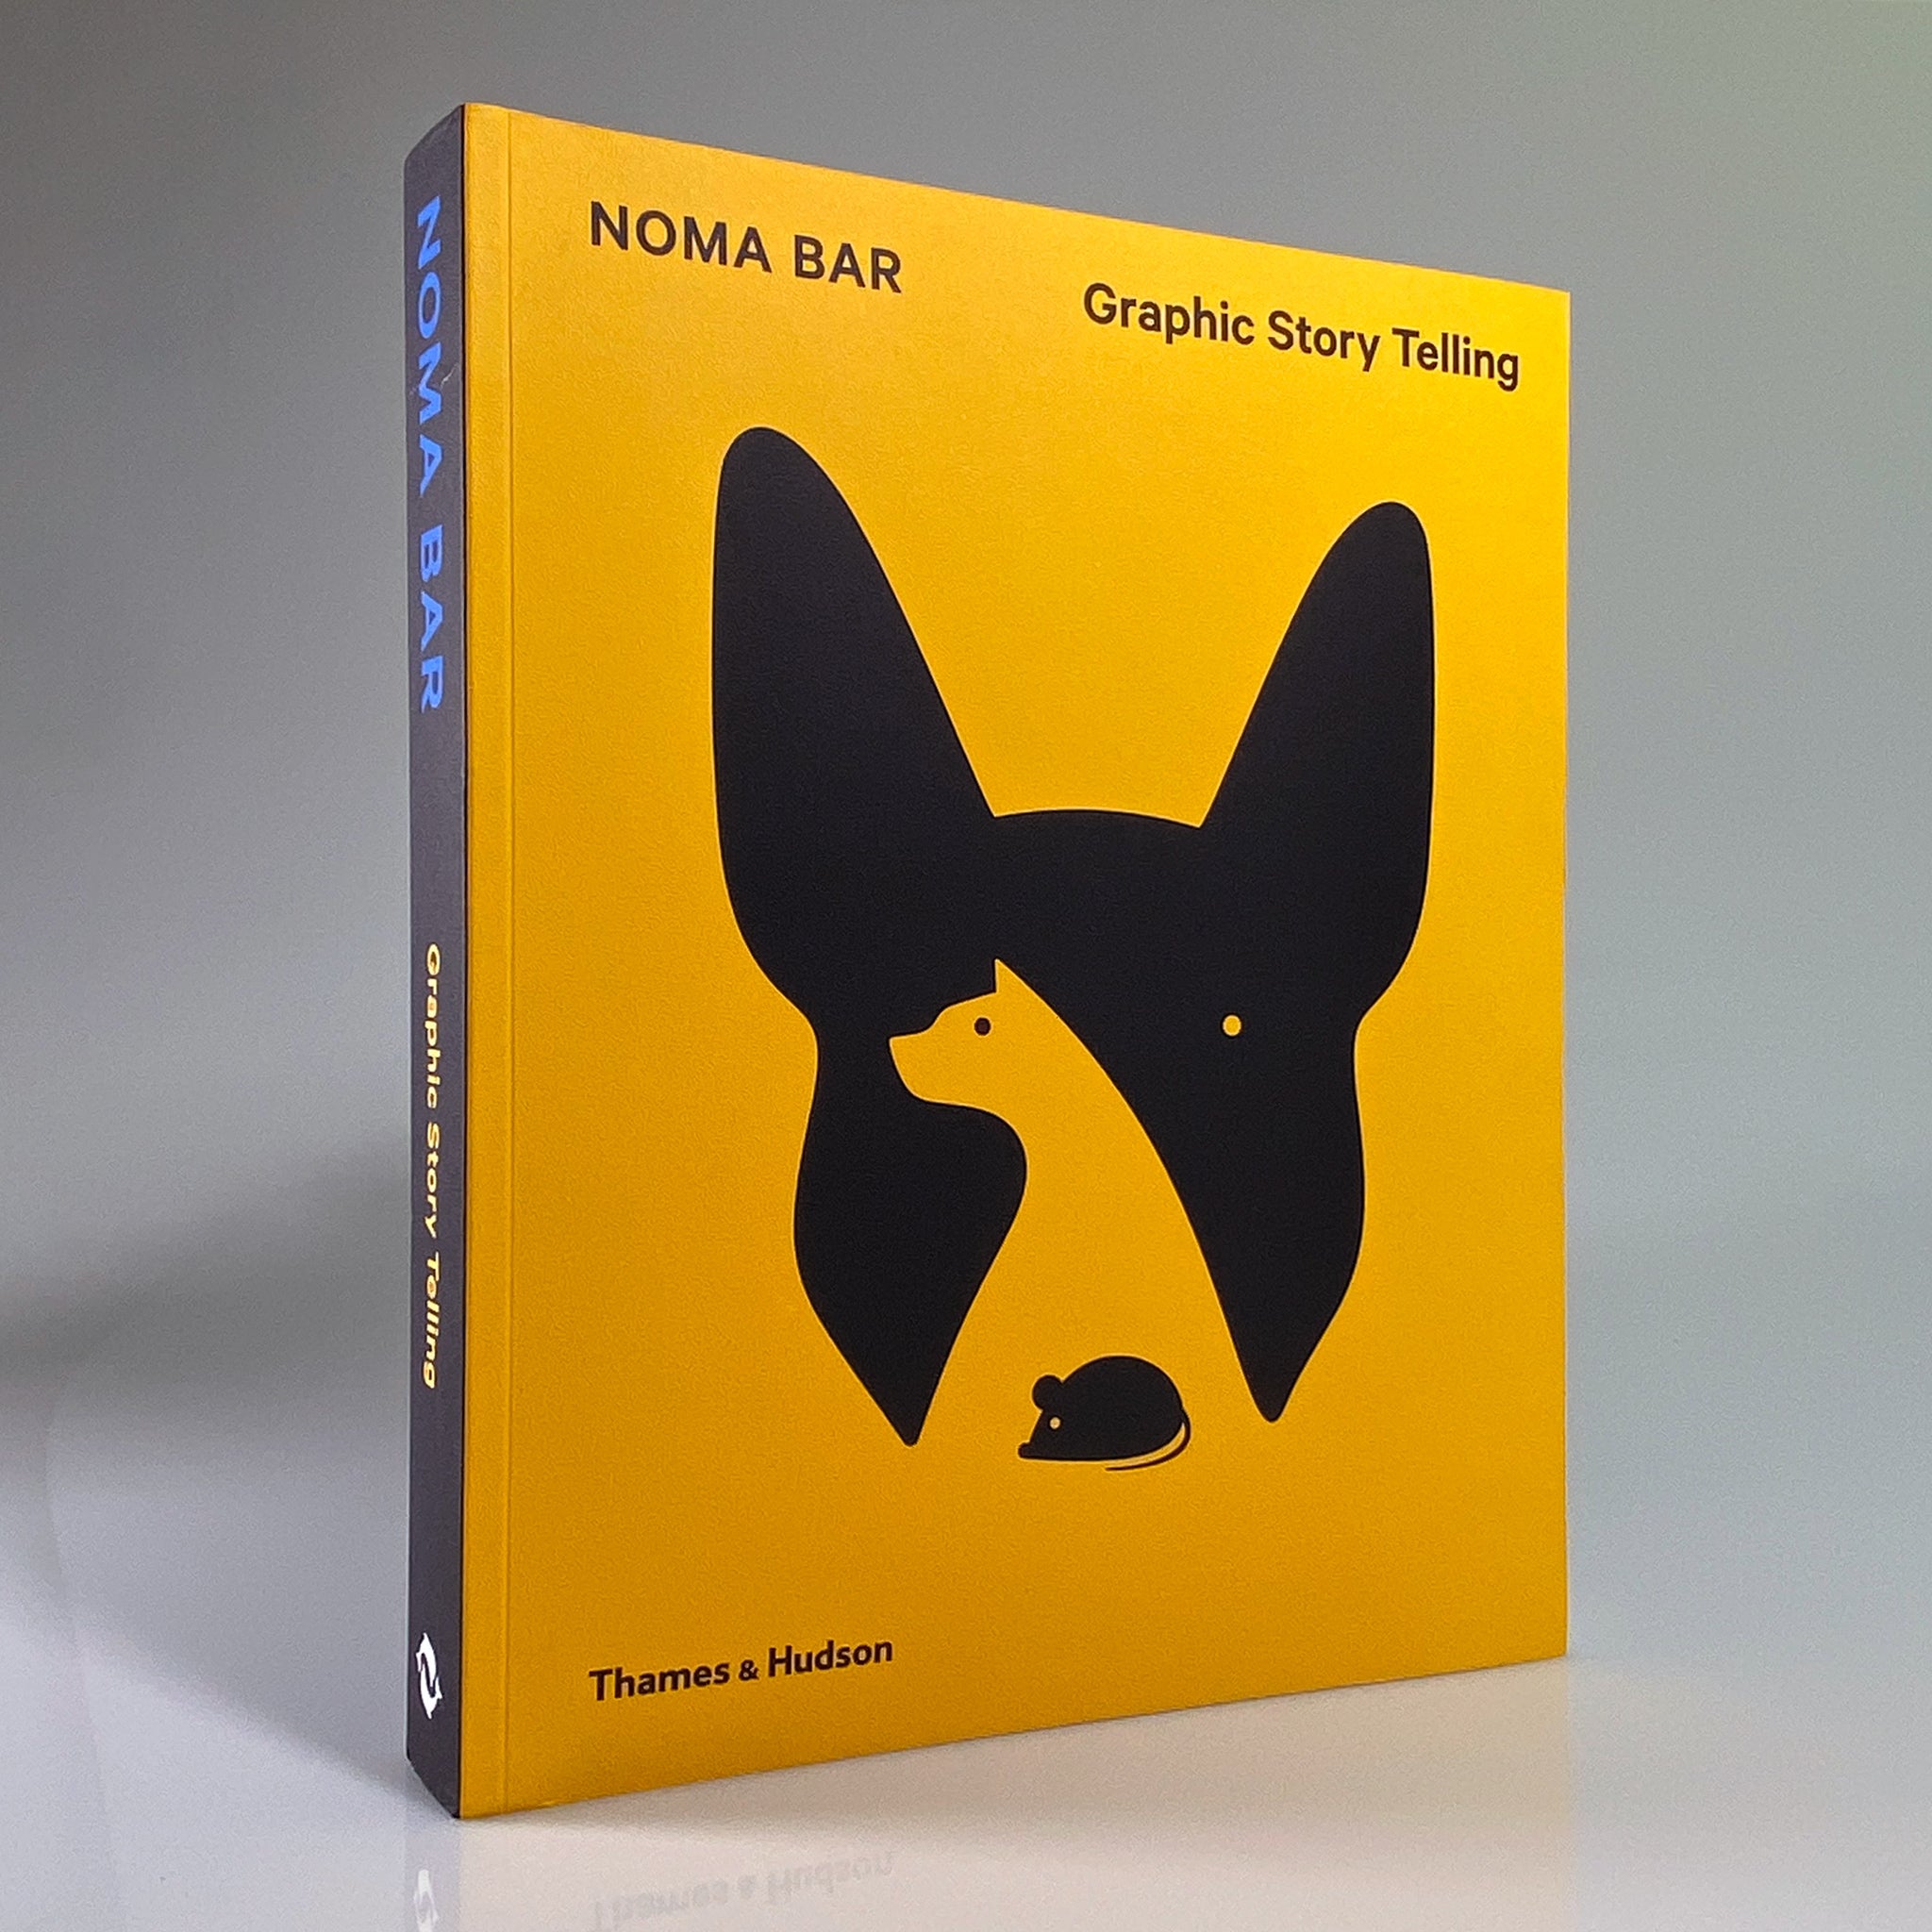 Noma Bar: Graphic Story Telling